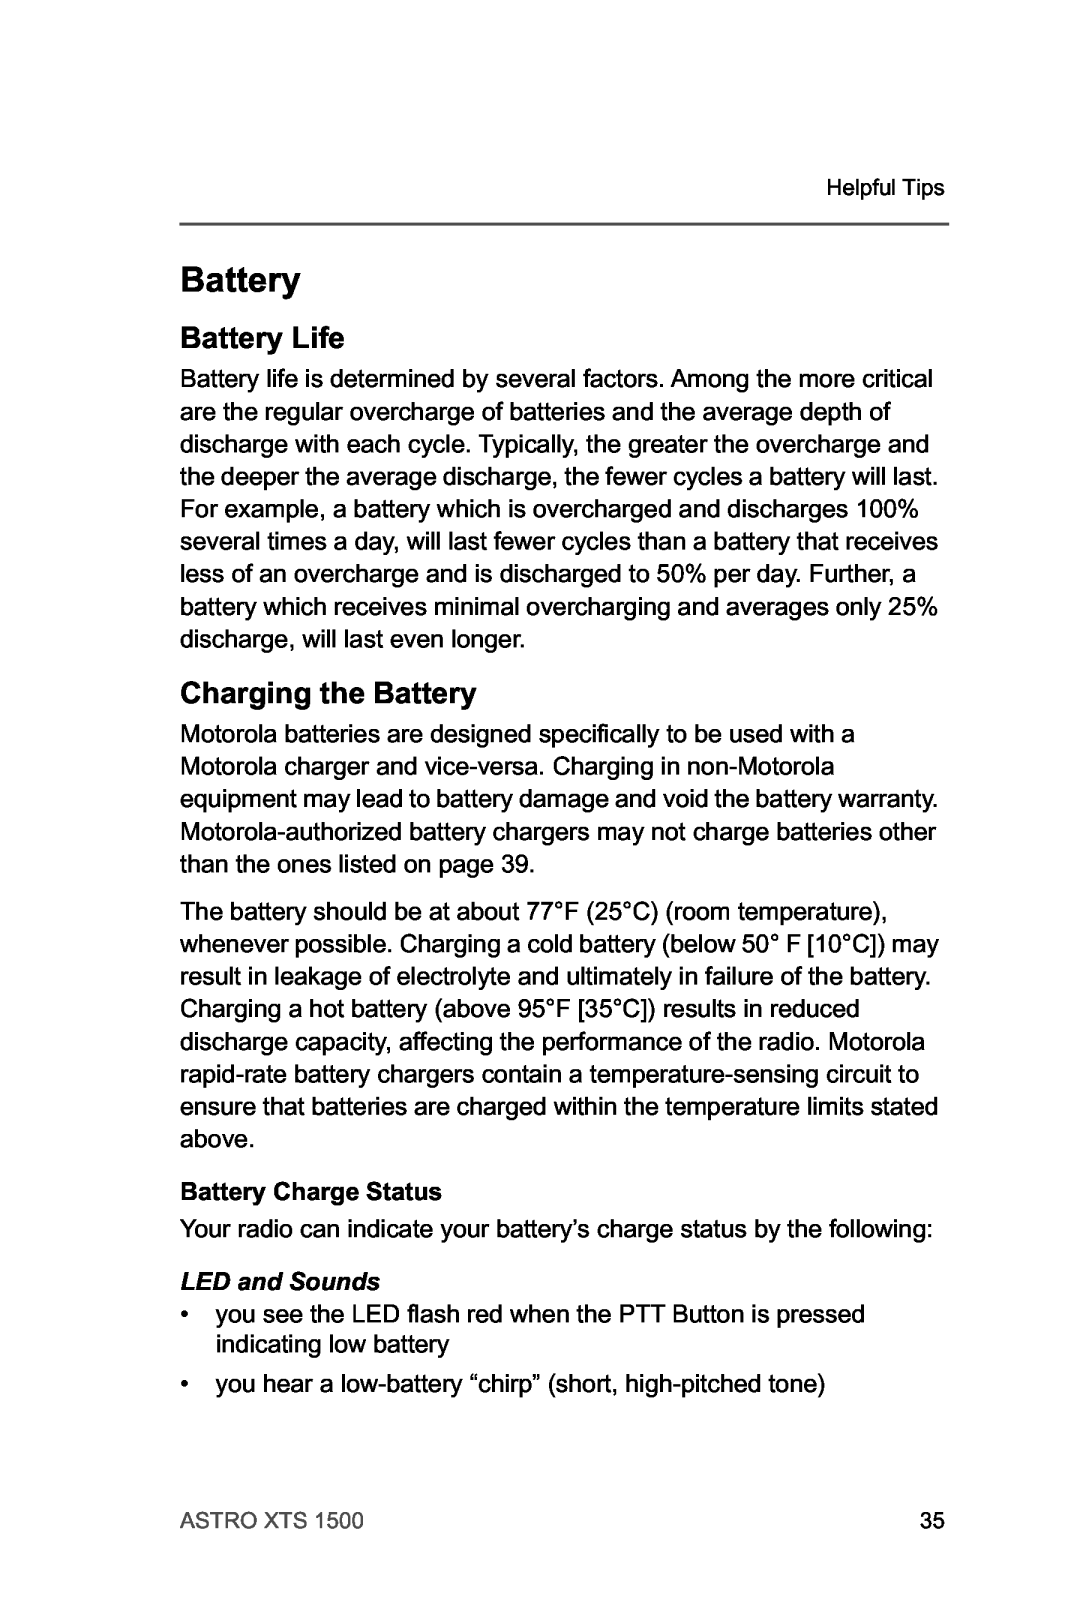 Motorola XTSTM 1500 manual Battery Life, Charging the Battery, Battery Charge Status 